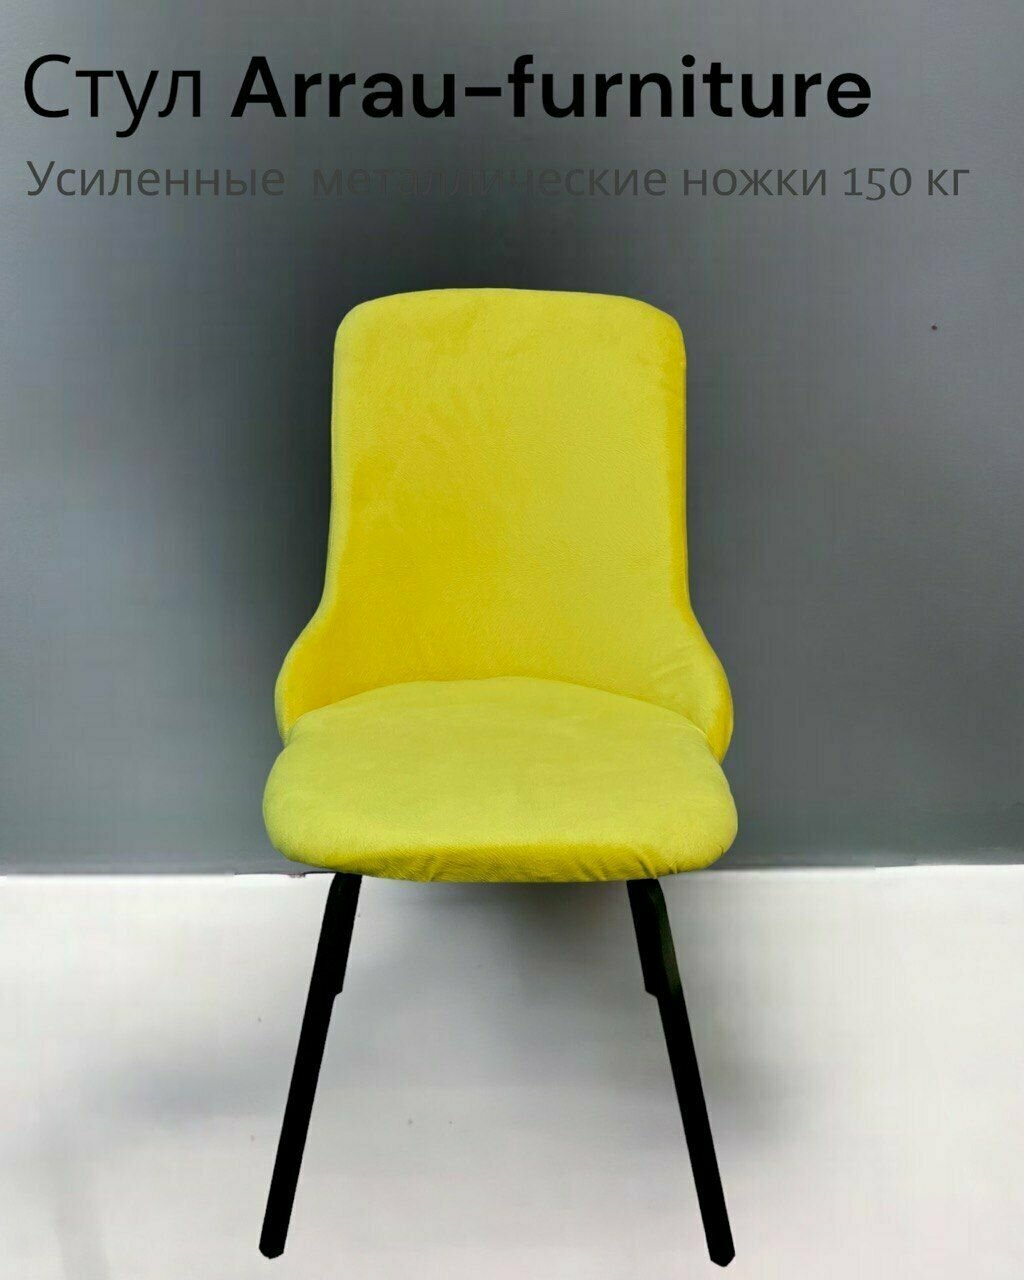 Стул для кухни arrau-furniture art, велюр желтый